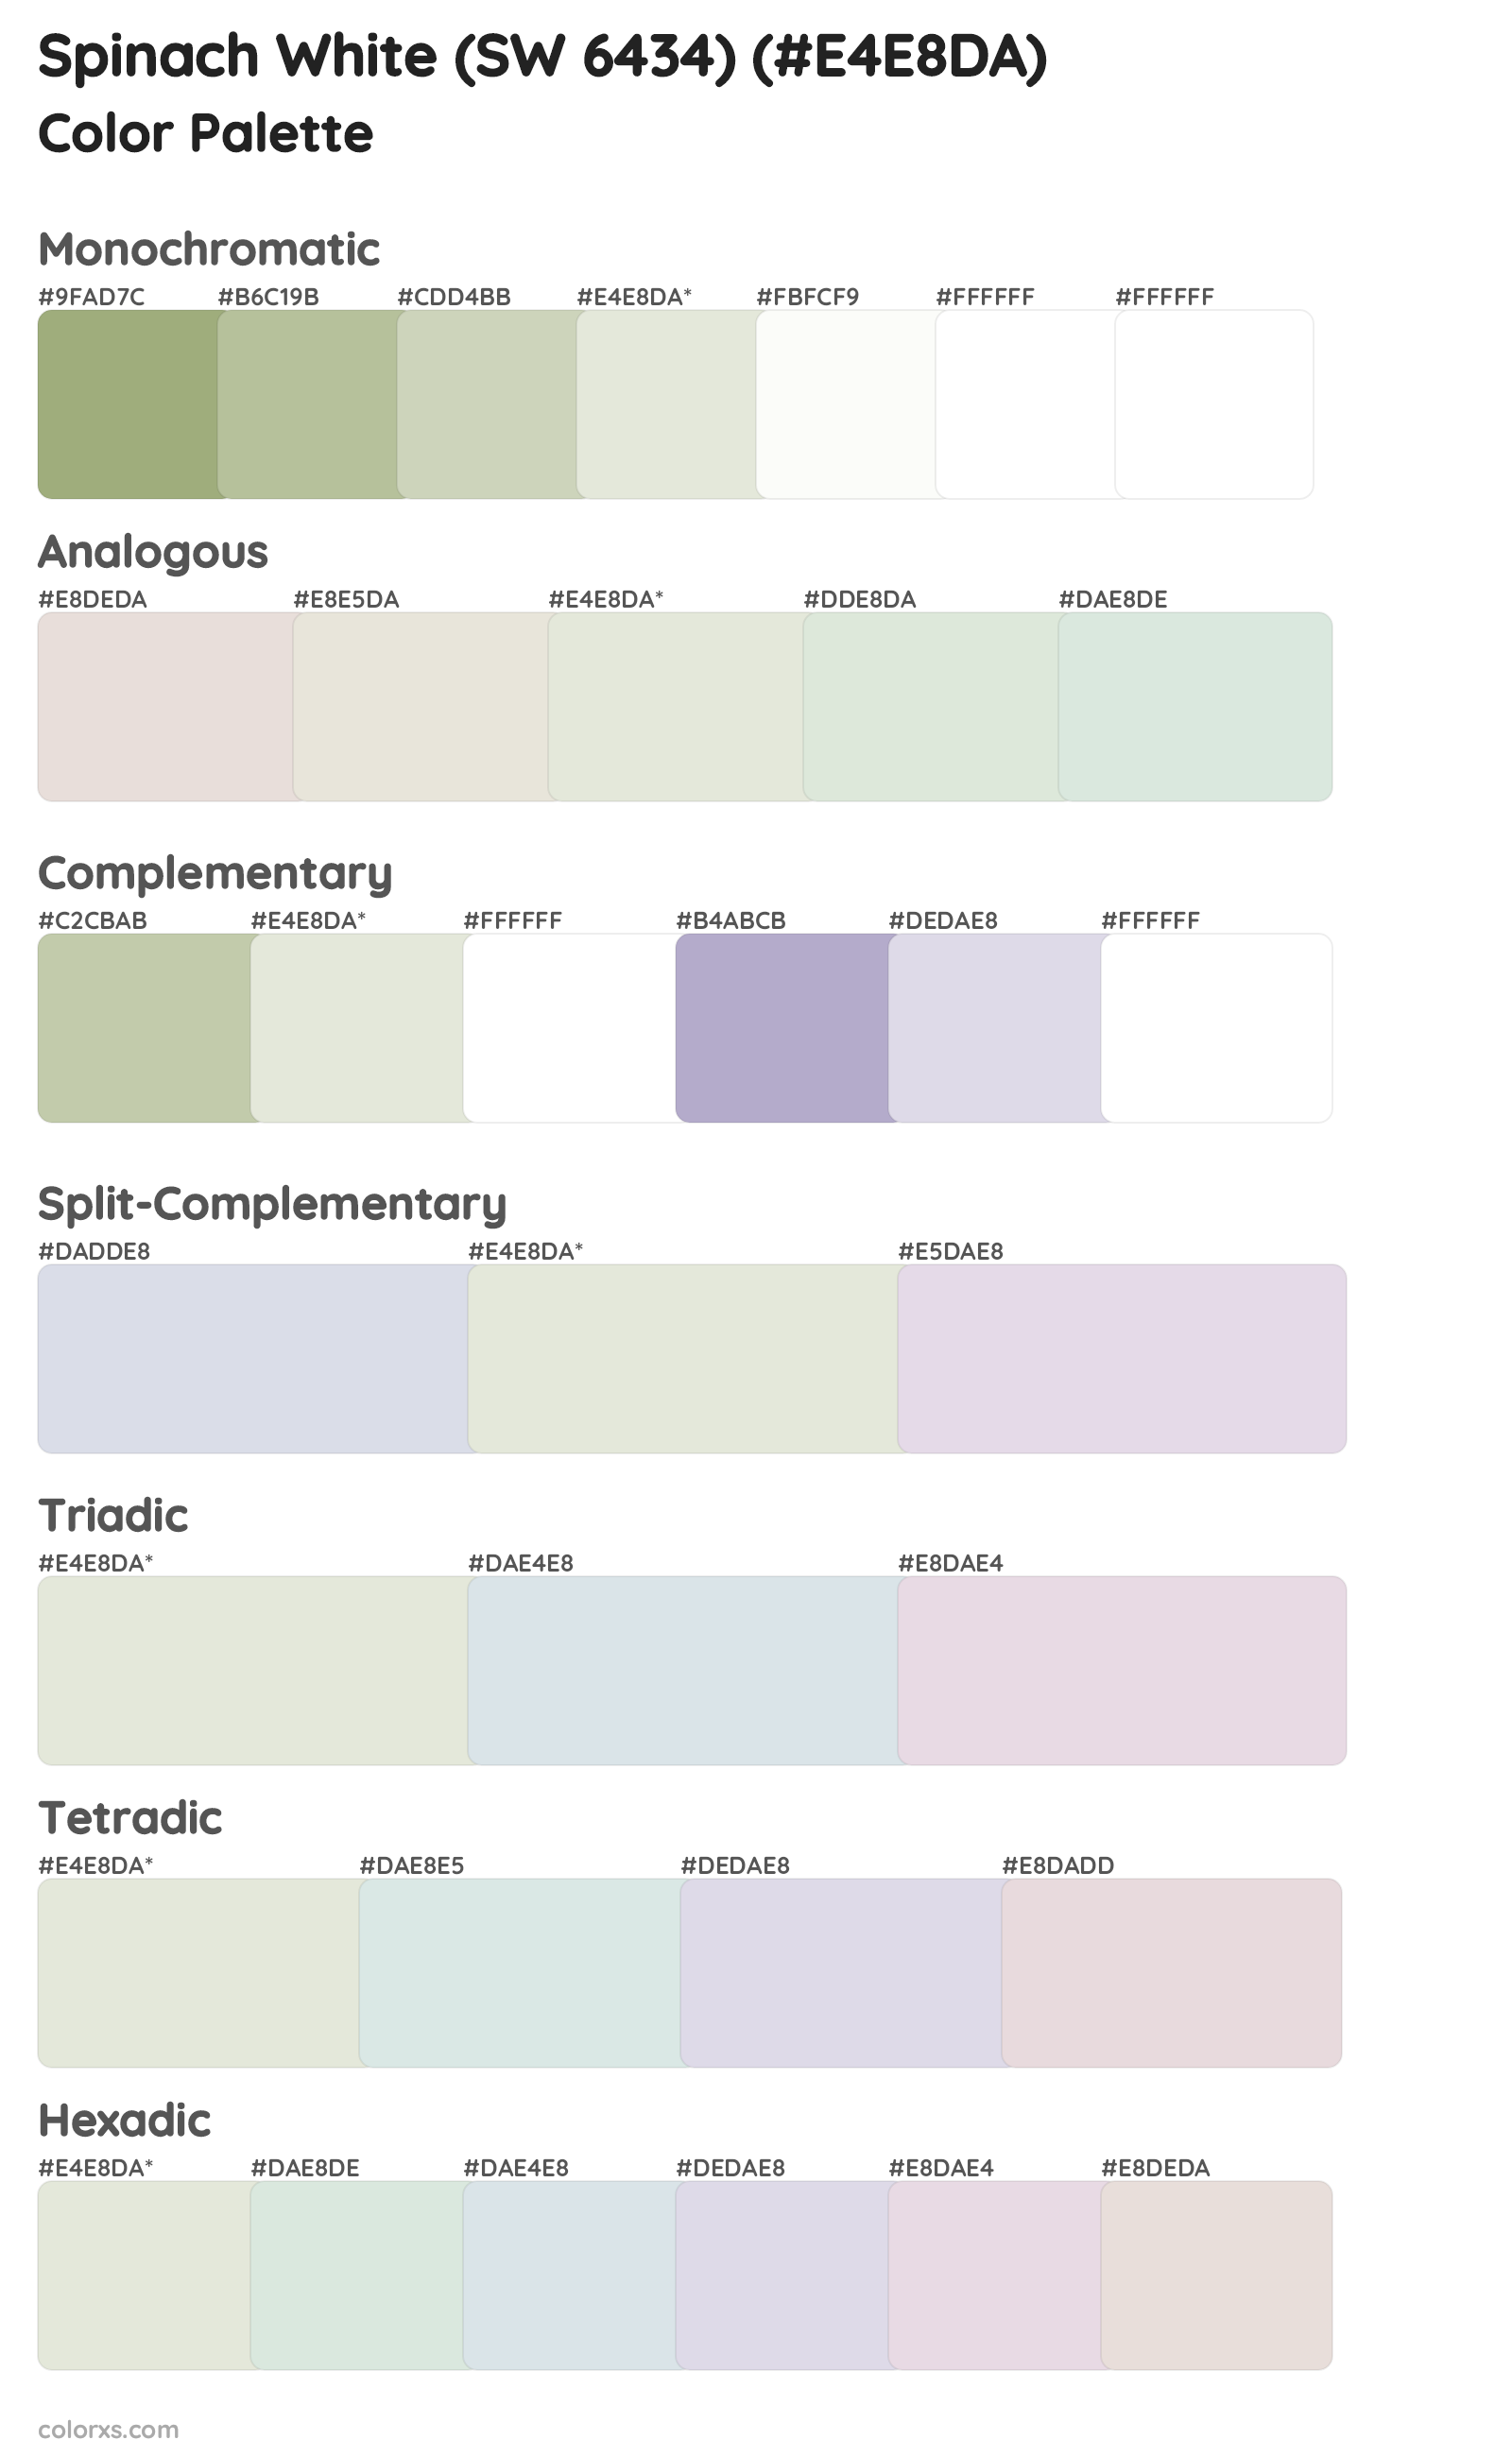 Spinach White (SW 6434) Color Scheme Palettes